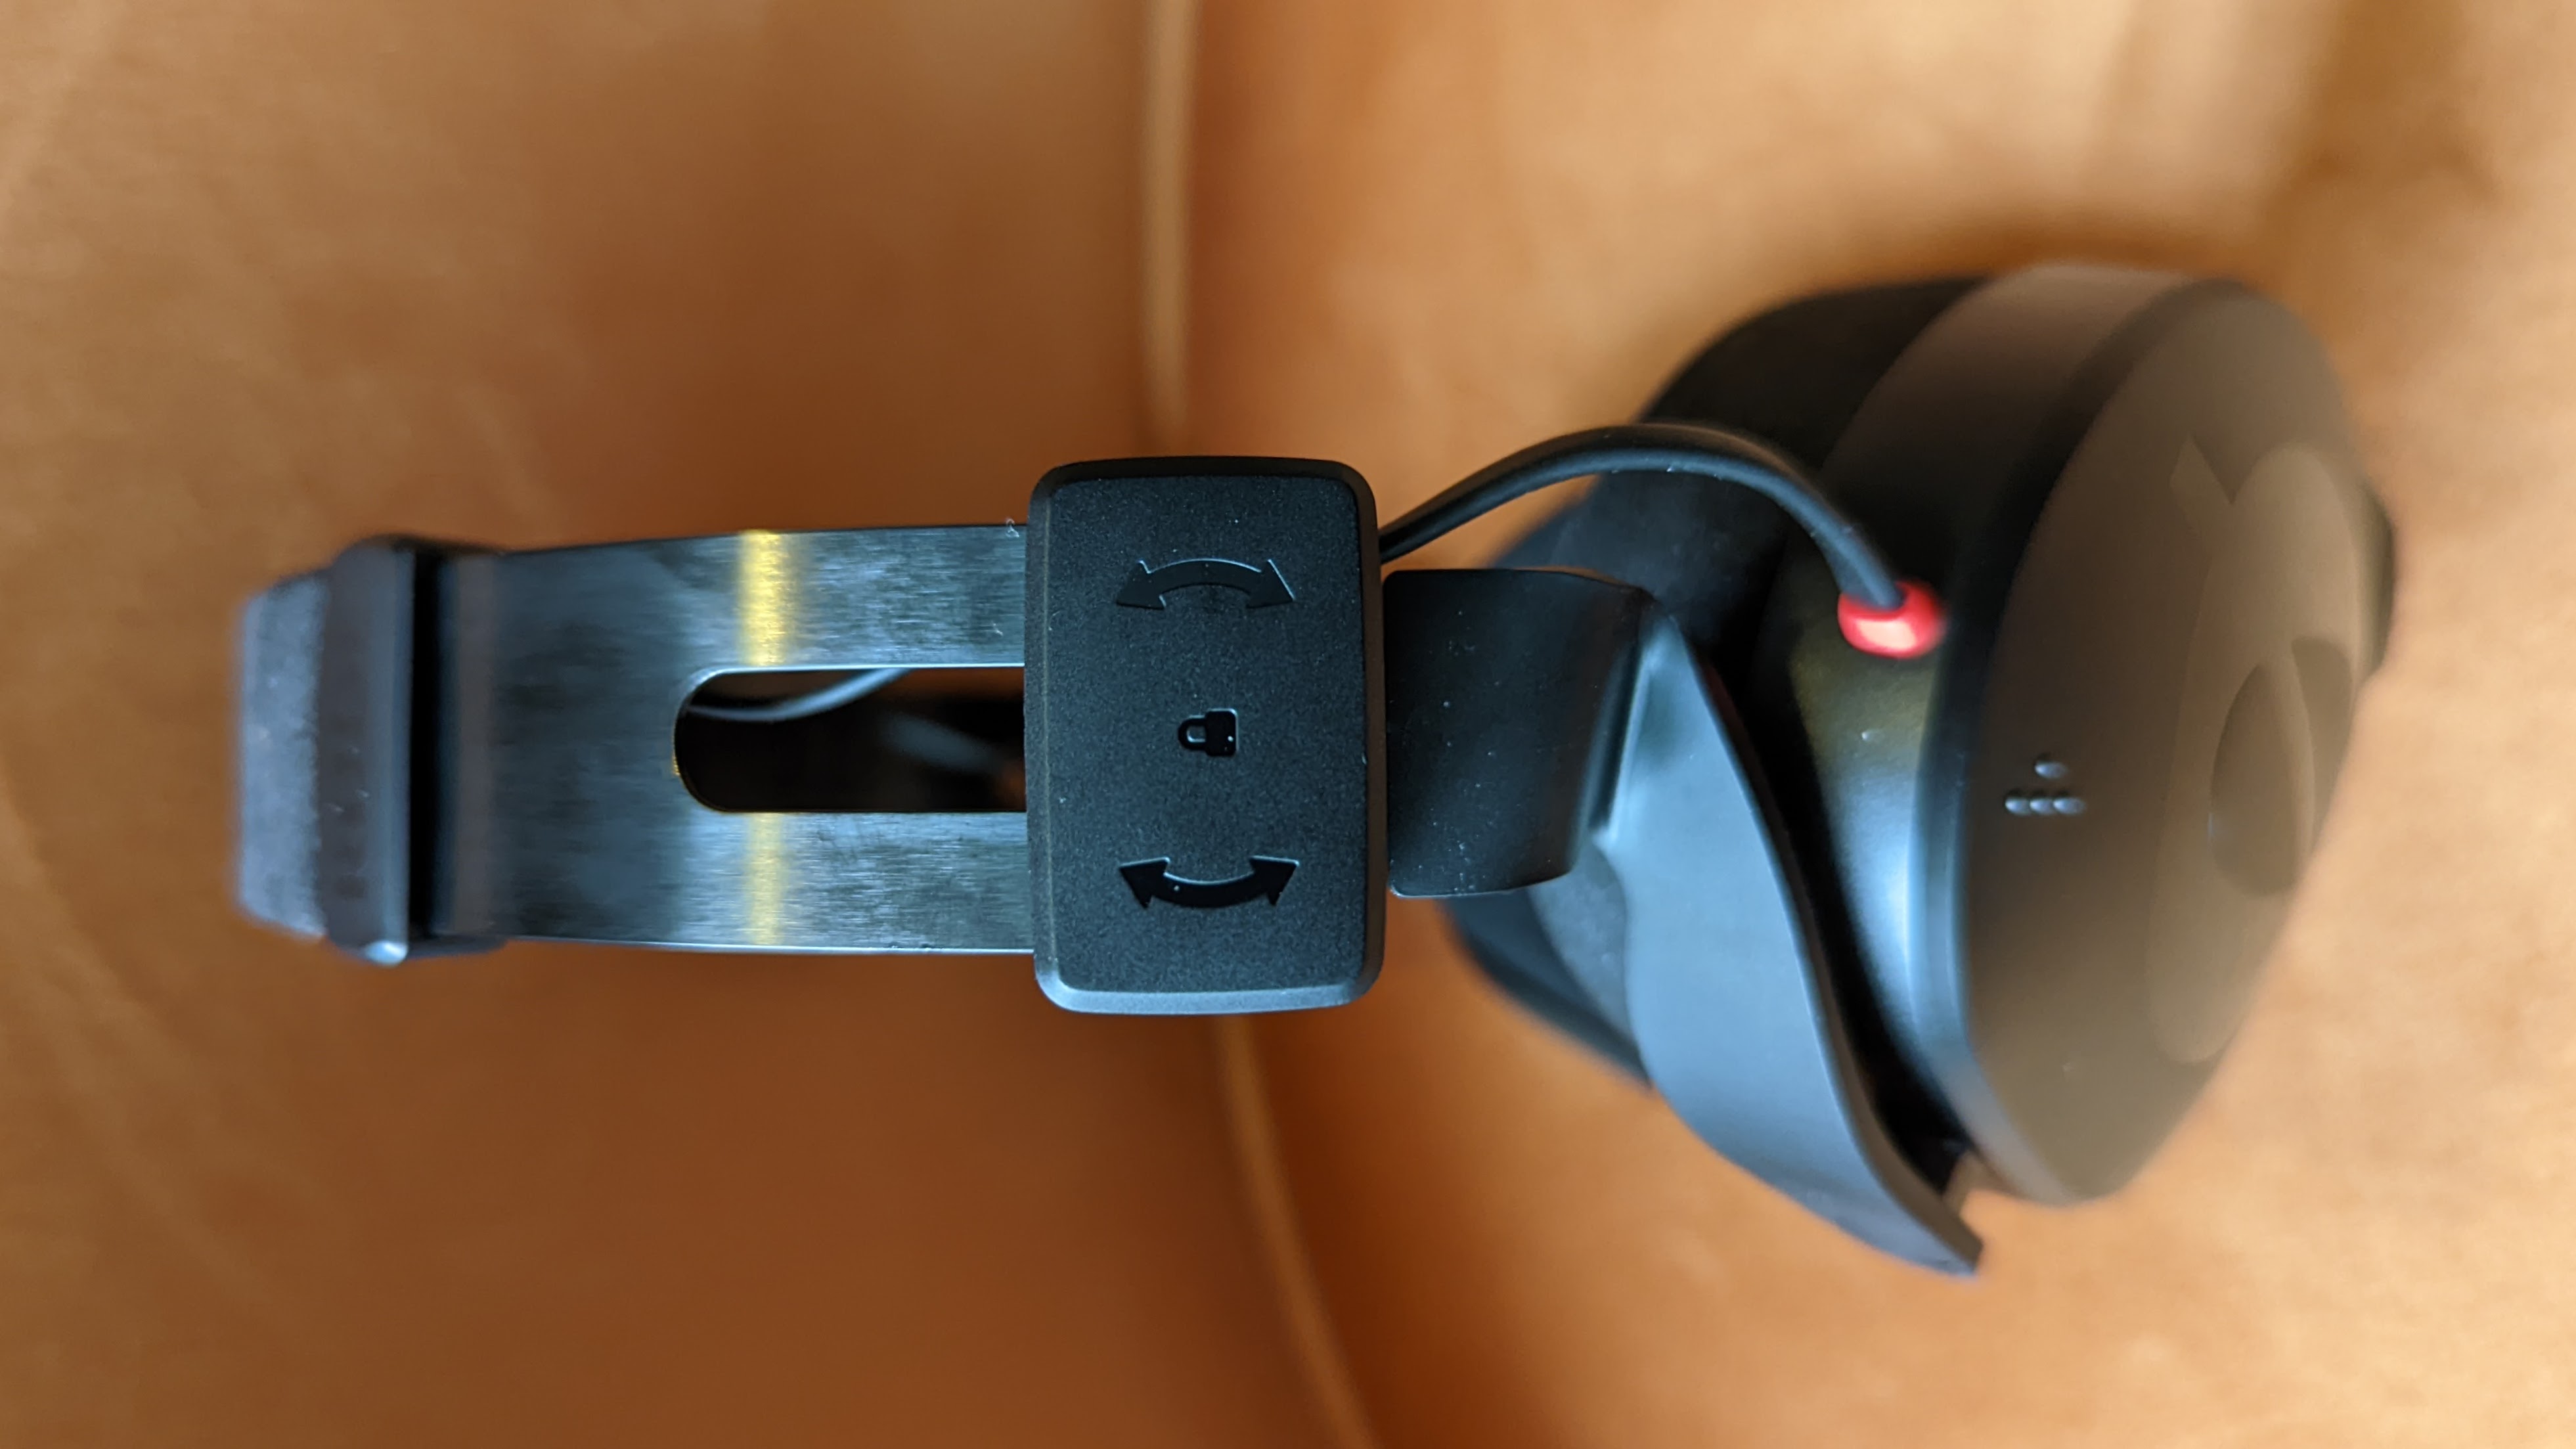 Studio monitoring headphones: Rode NTH-100